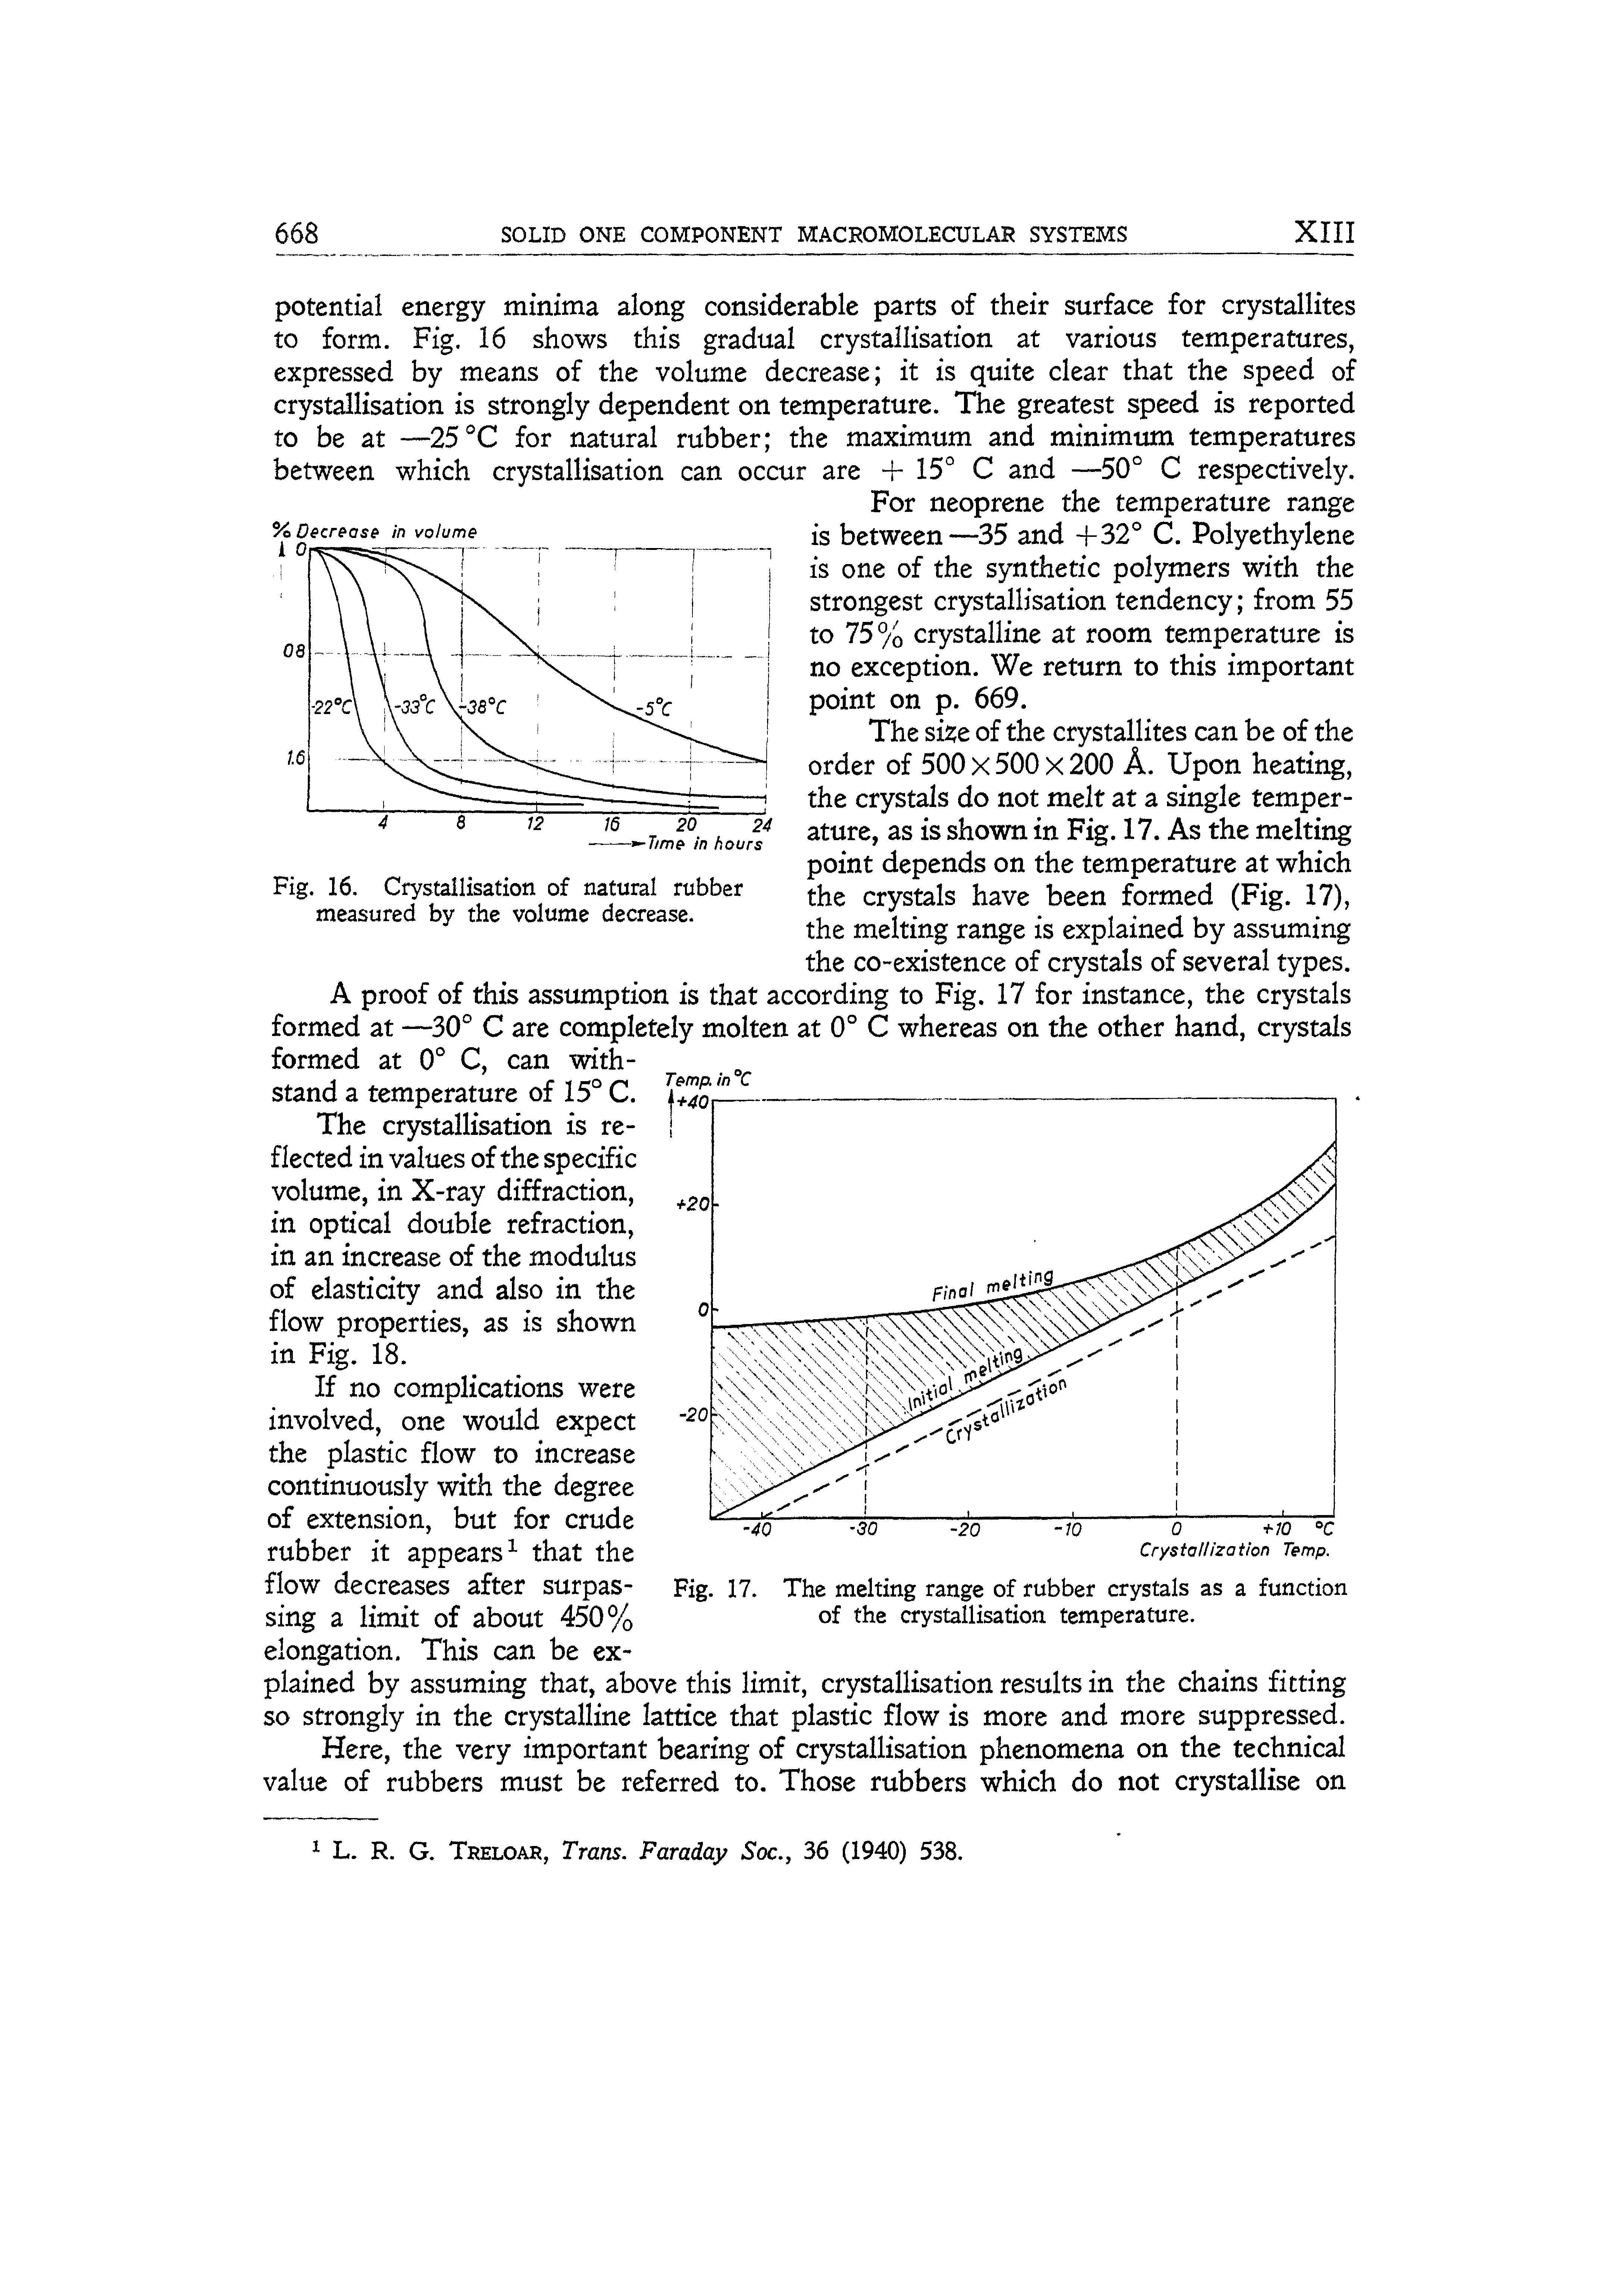 Fig. 16. Crystallisation of natural rubber measured by the volume decrease.